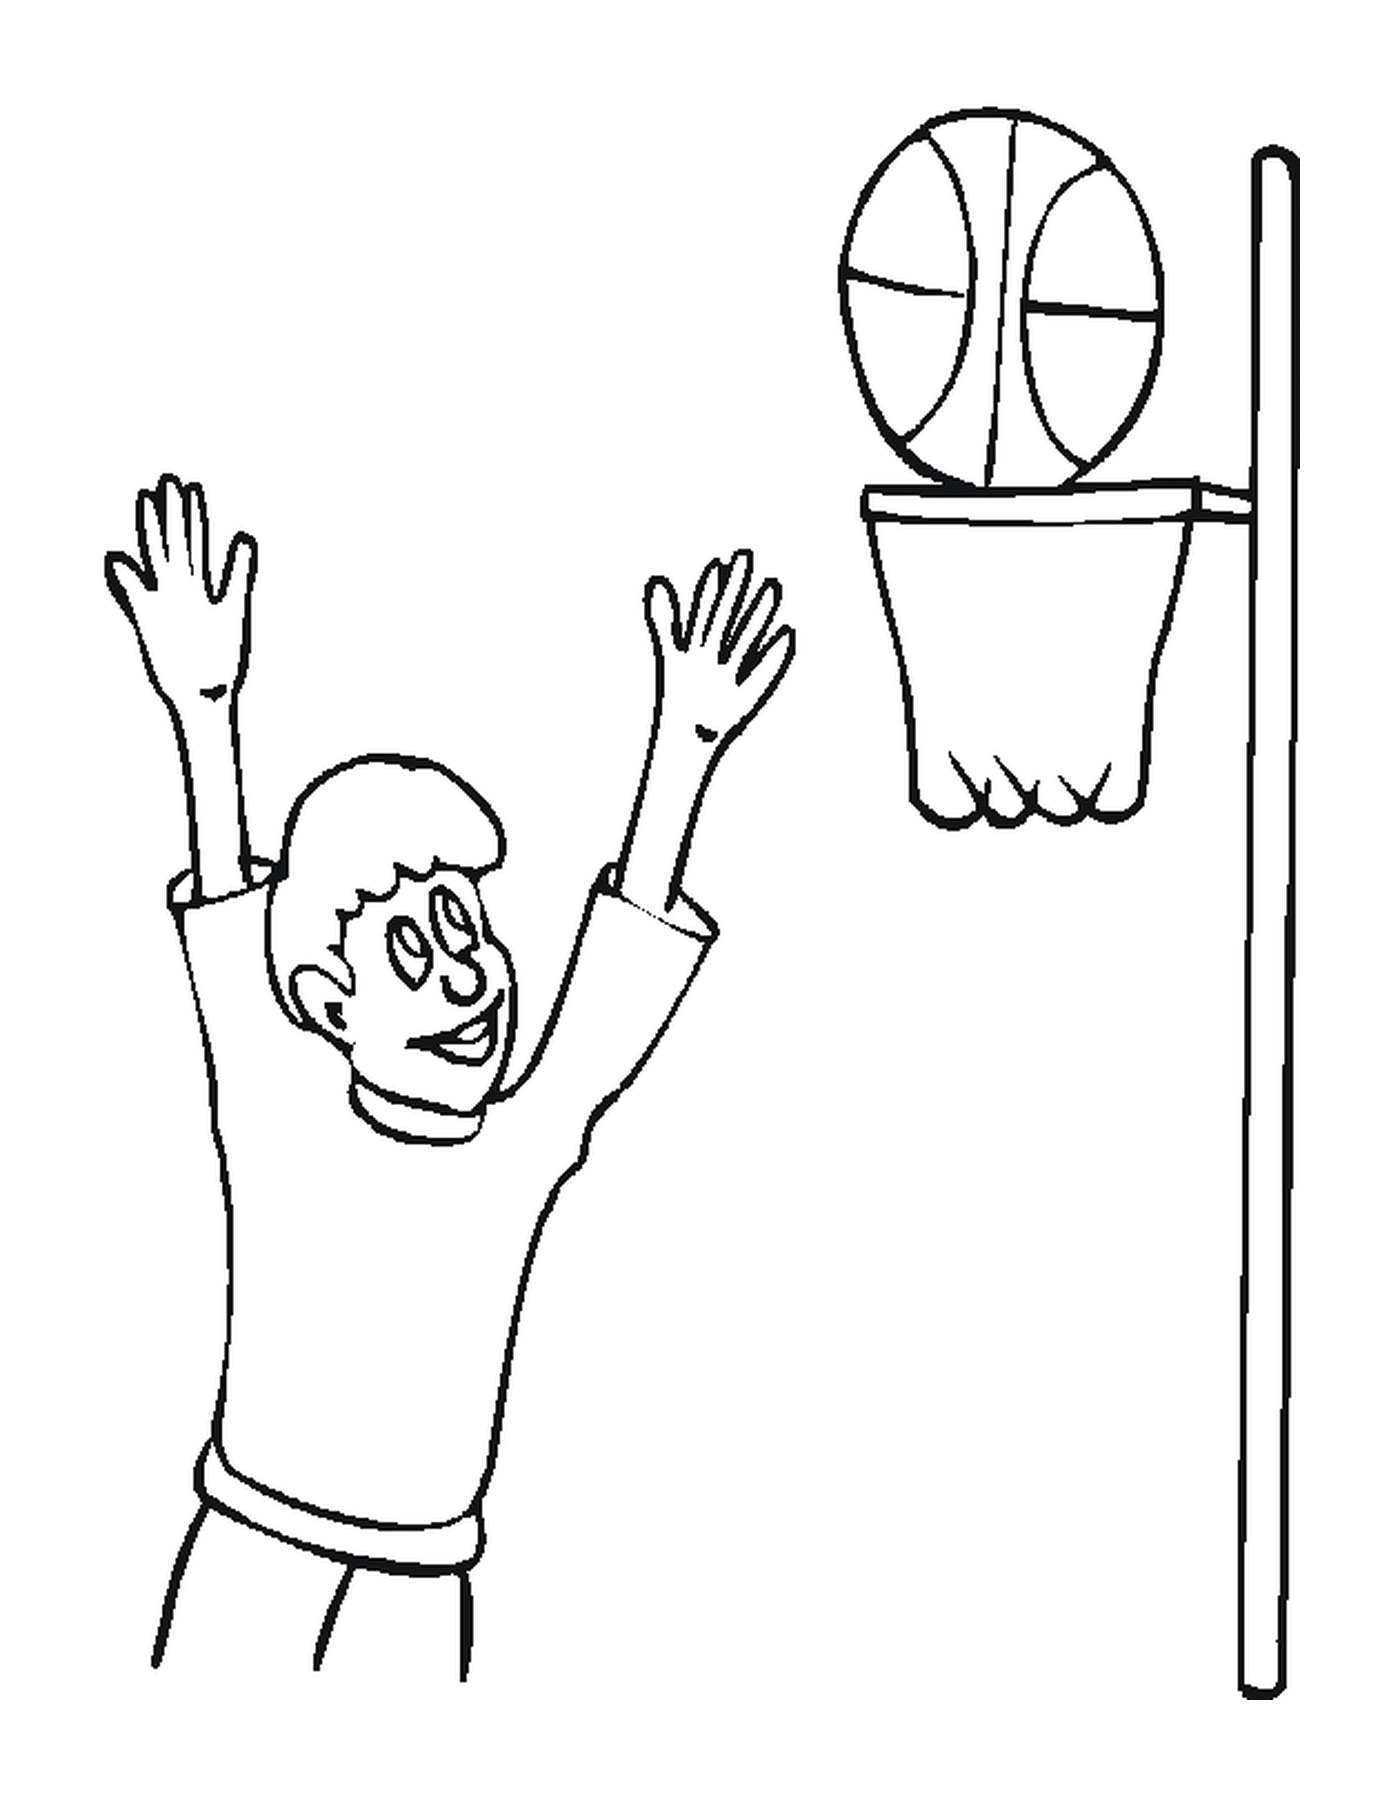  Баскетболист играет в комнате 